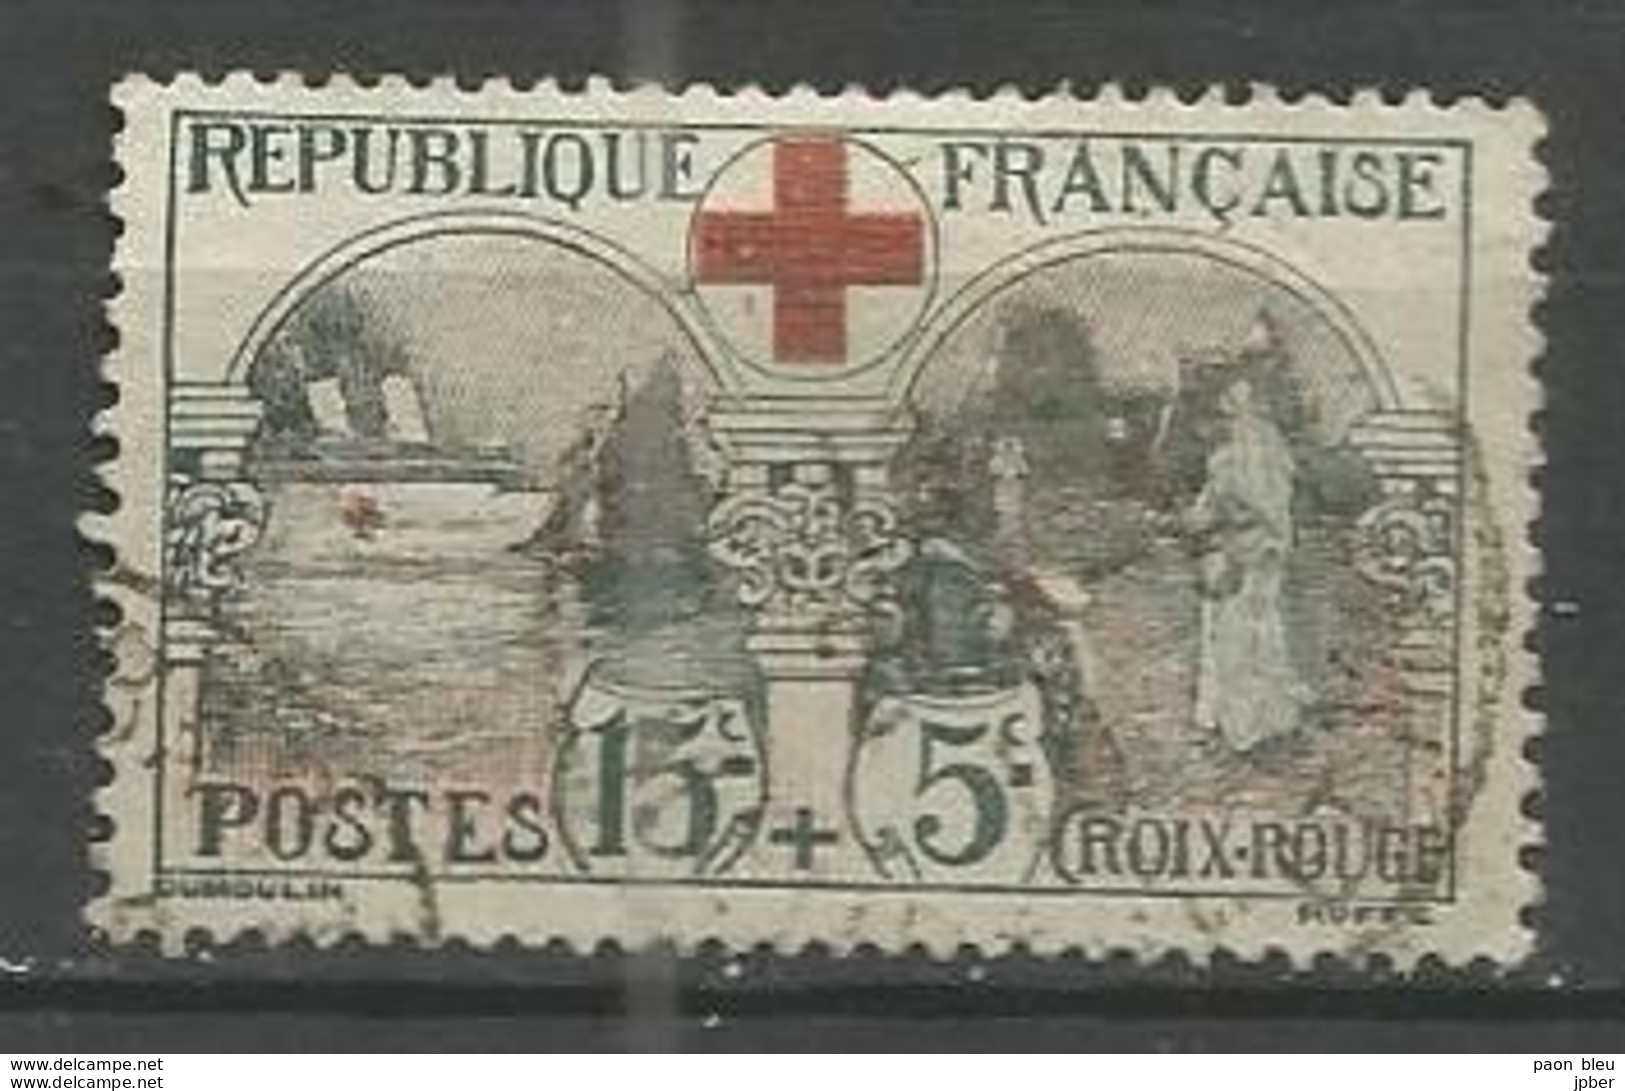 France - Croix-Rouge N°156 - Gebraucht